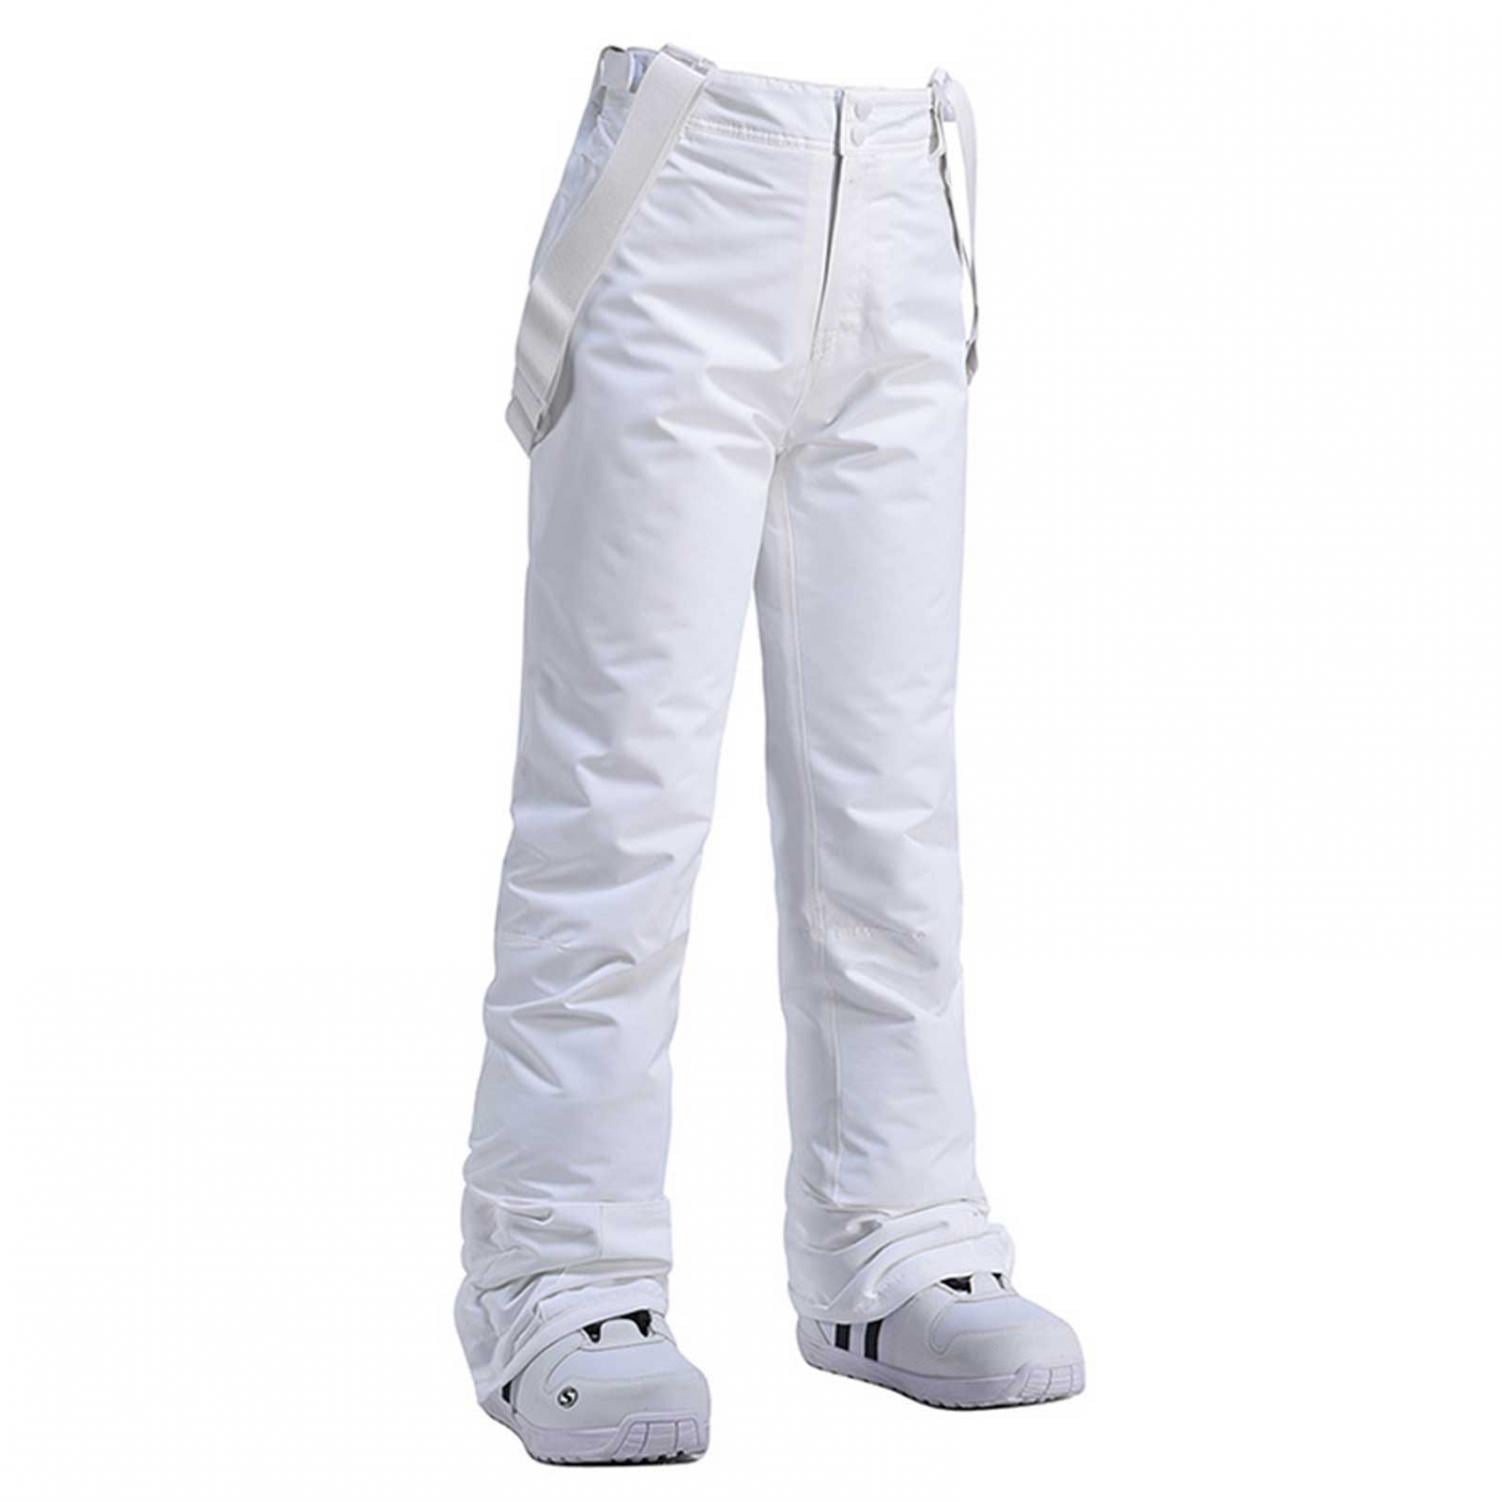 Women's Snow Pants Removable Suspender Ski Outdoor Fleece Insulated Pants 